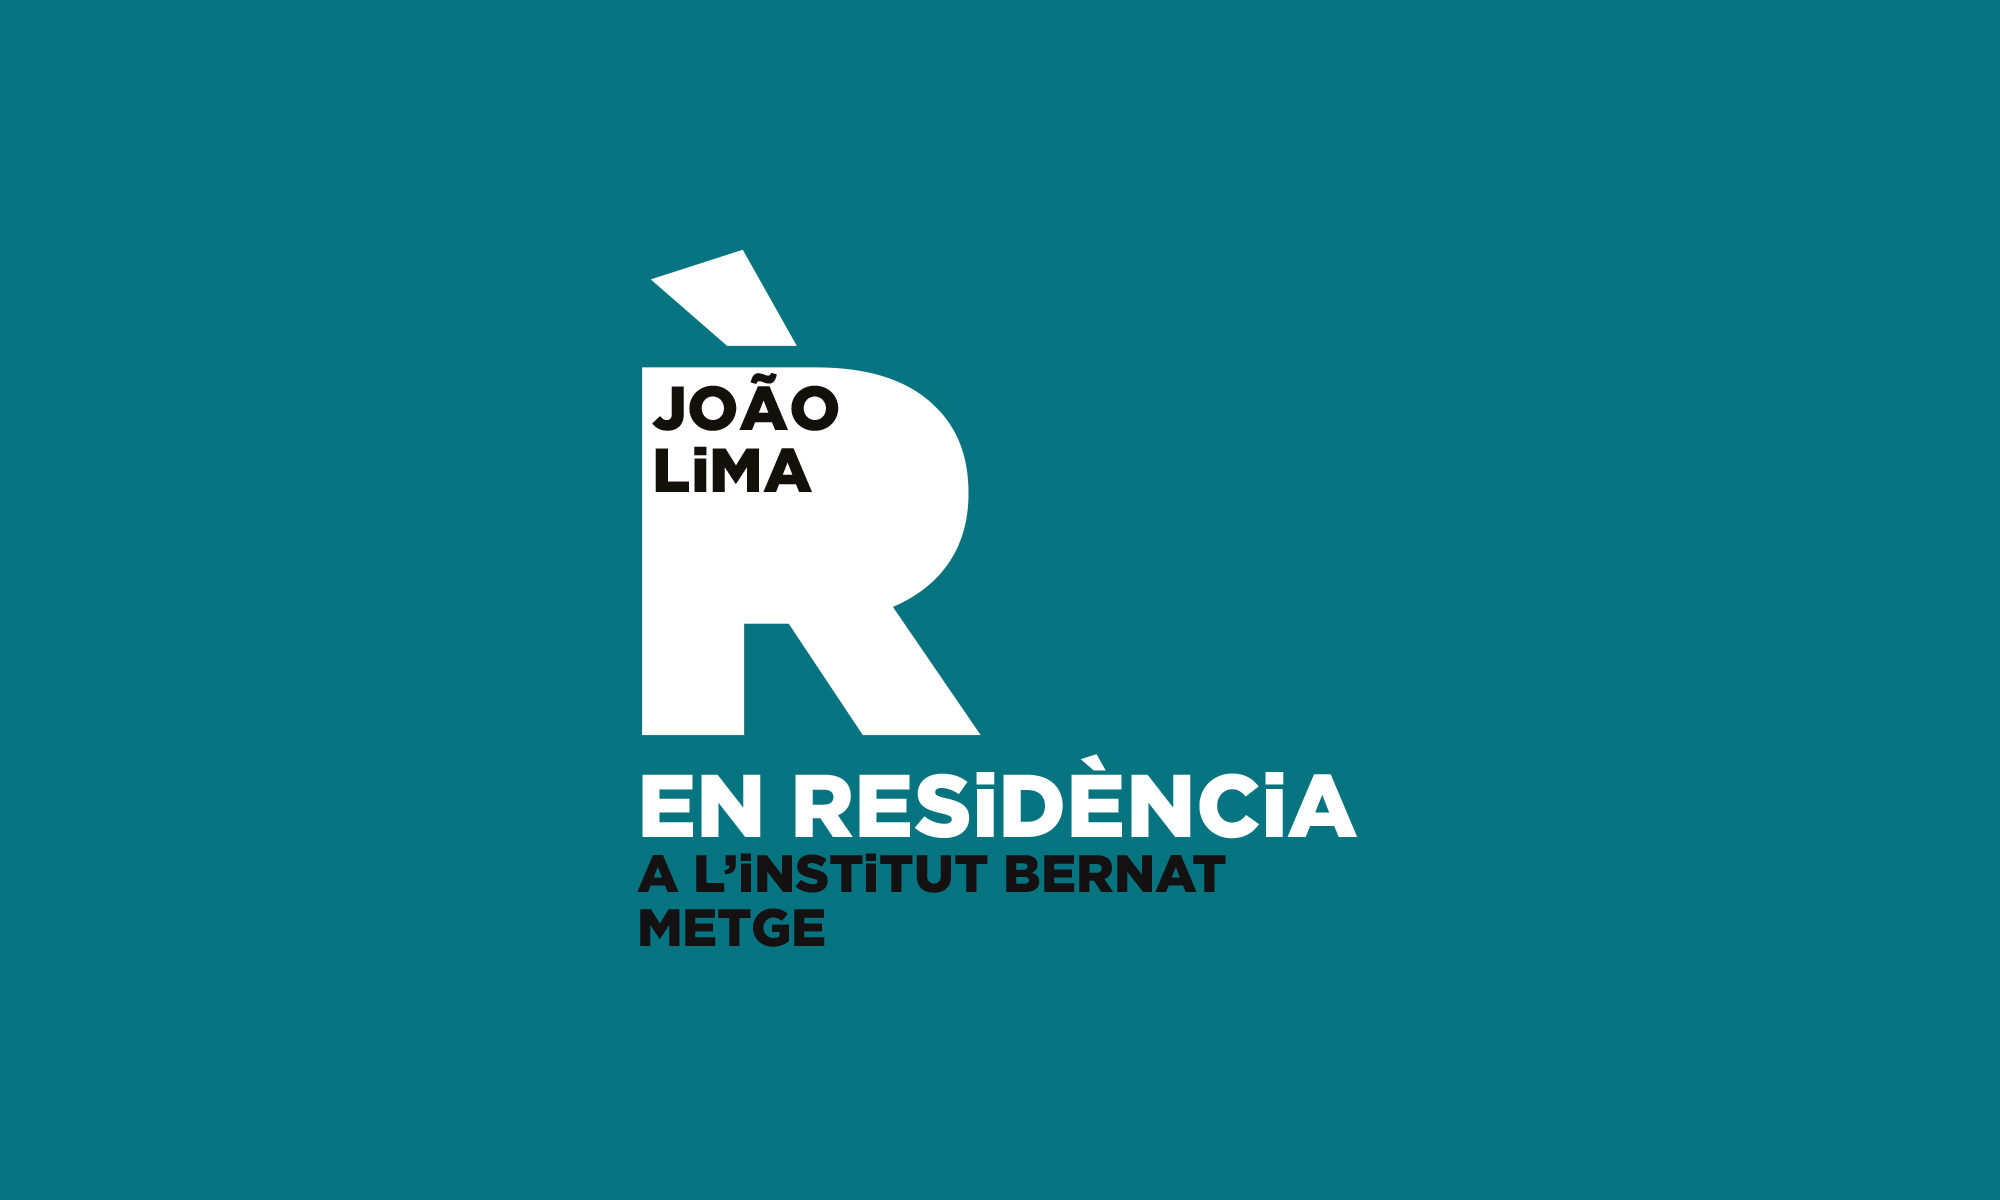 João Lima EN RESIDÈNCIA